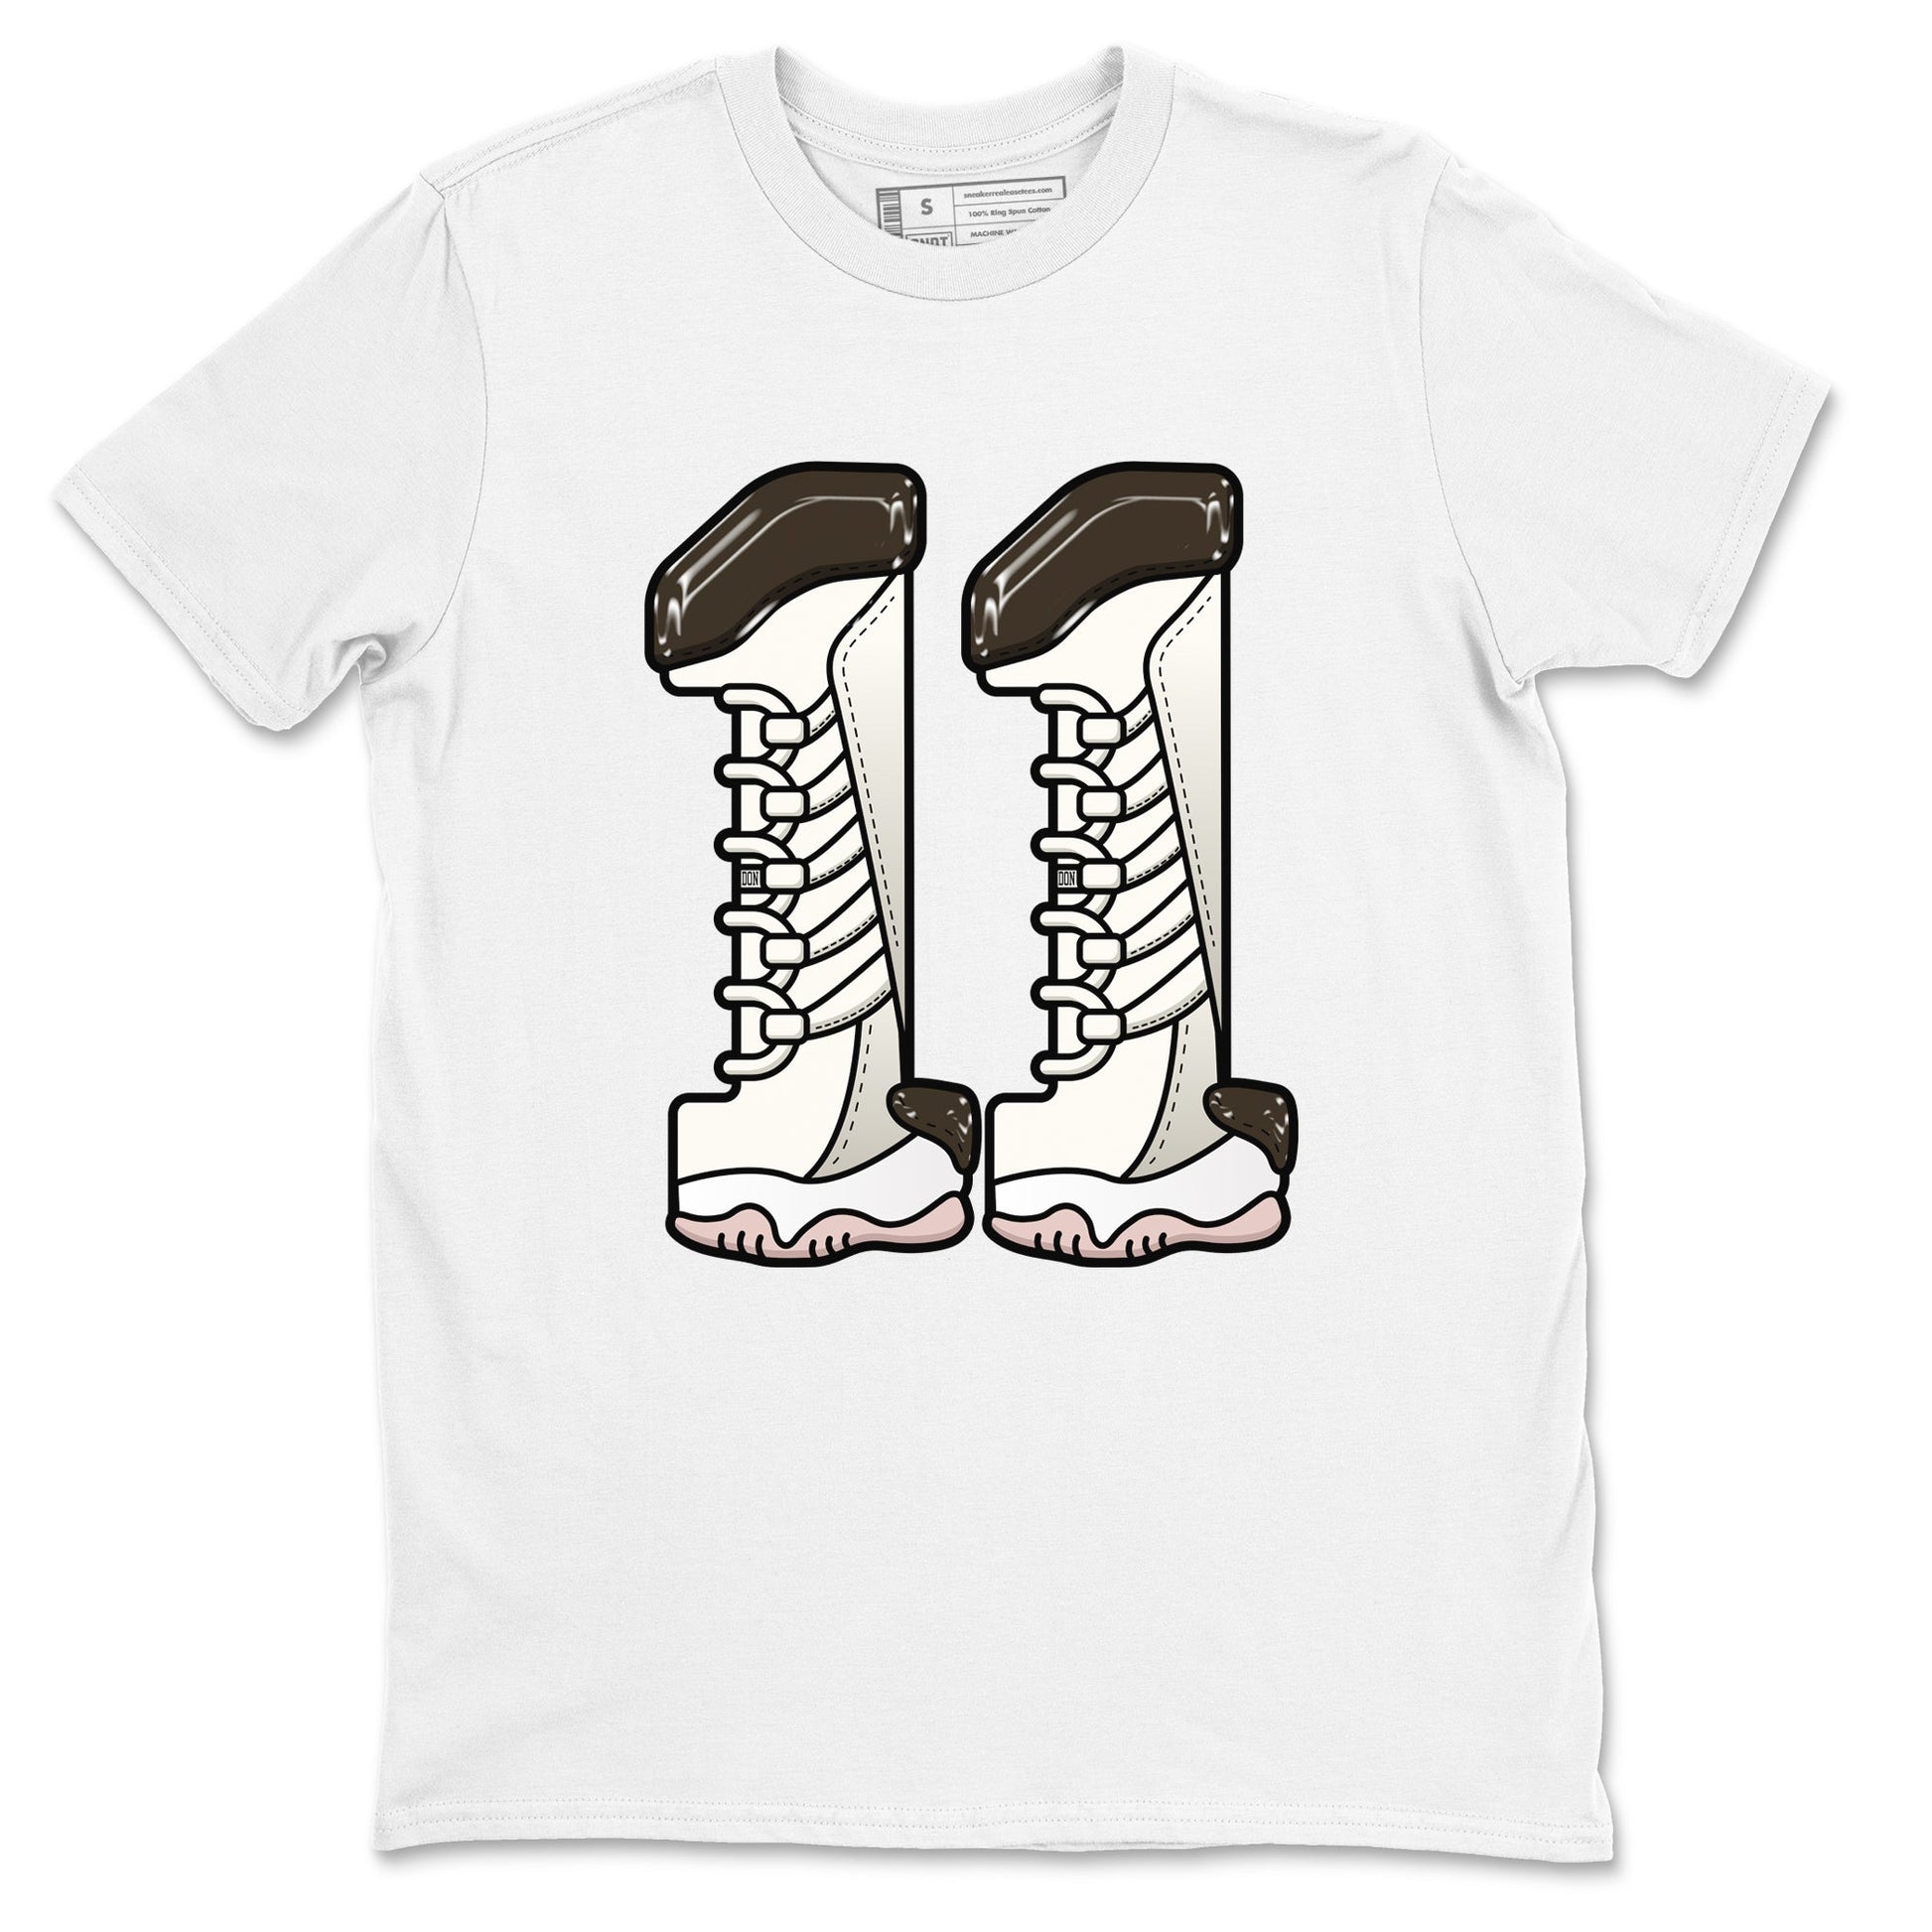 11s Neapolitan shirt to match jordans Number 11 sneaker tees Air Jordan 11 Neapolitan SNRT Sneaker Release Tees Unisex White 2 T-Shirt